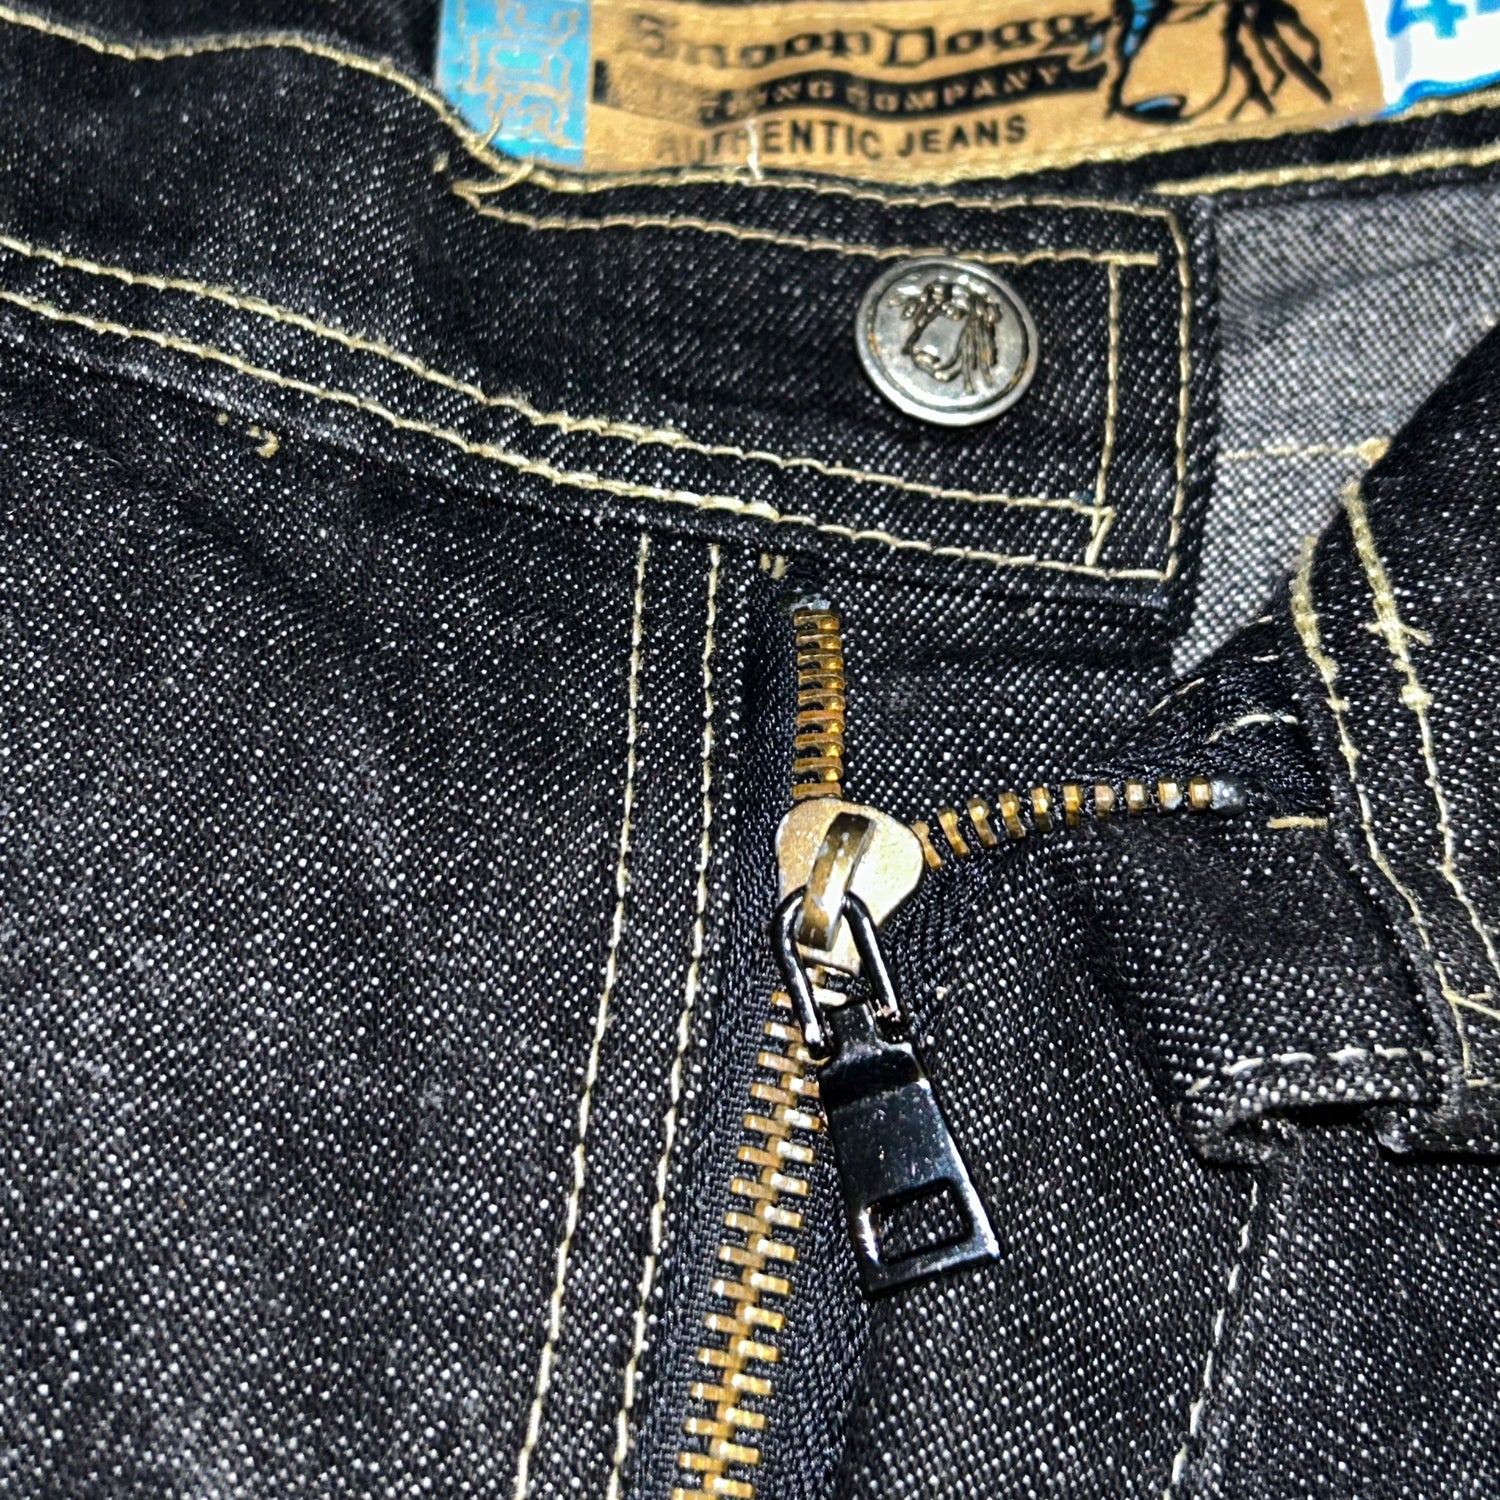 Baggy Jeans Snoop Dogg Clothing Vintage  (46 USA  XXXXL)